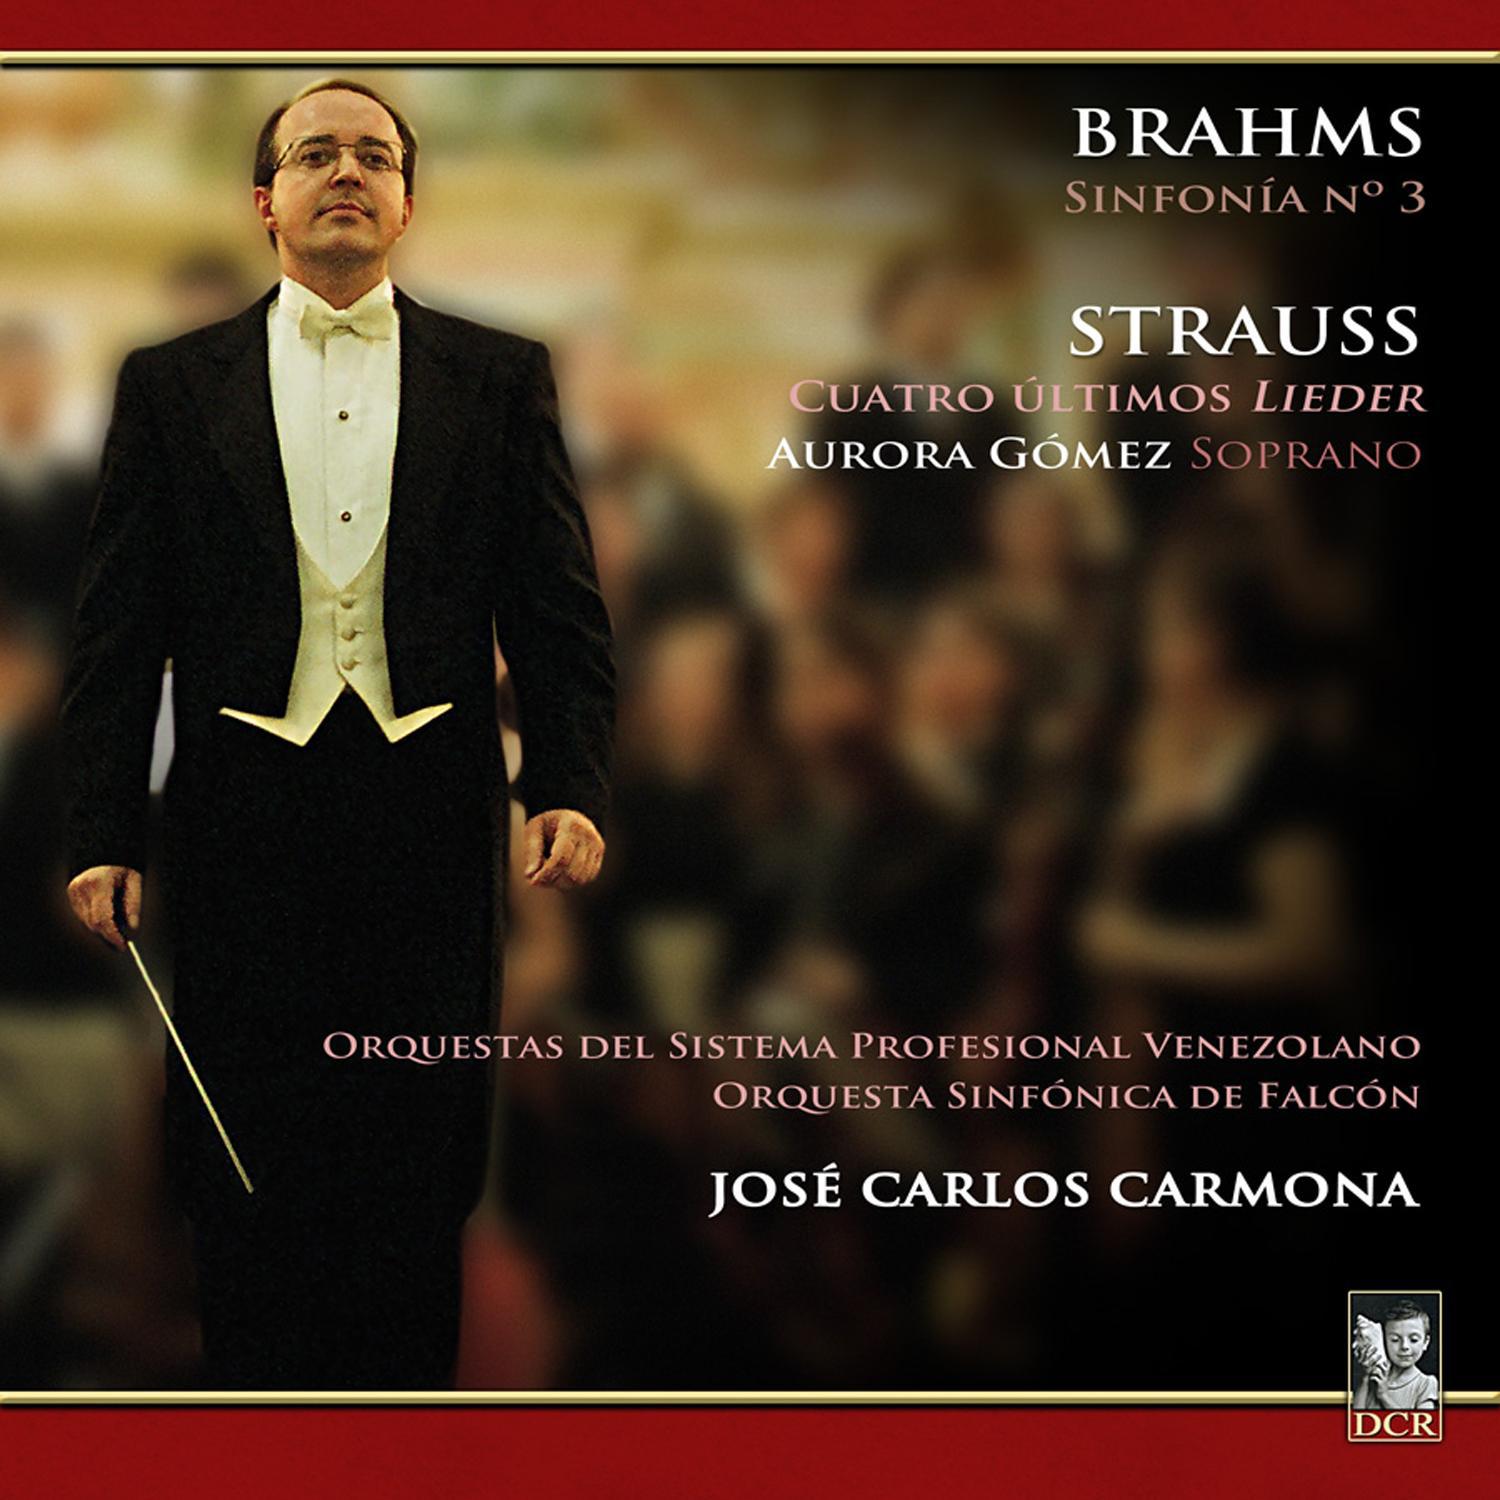 Brahms: Sinfonía No. 3 - Strauss: Cuatro Últimos Lieder